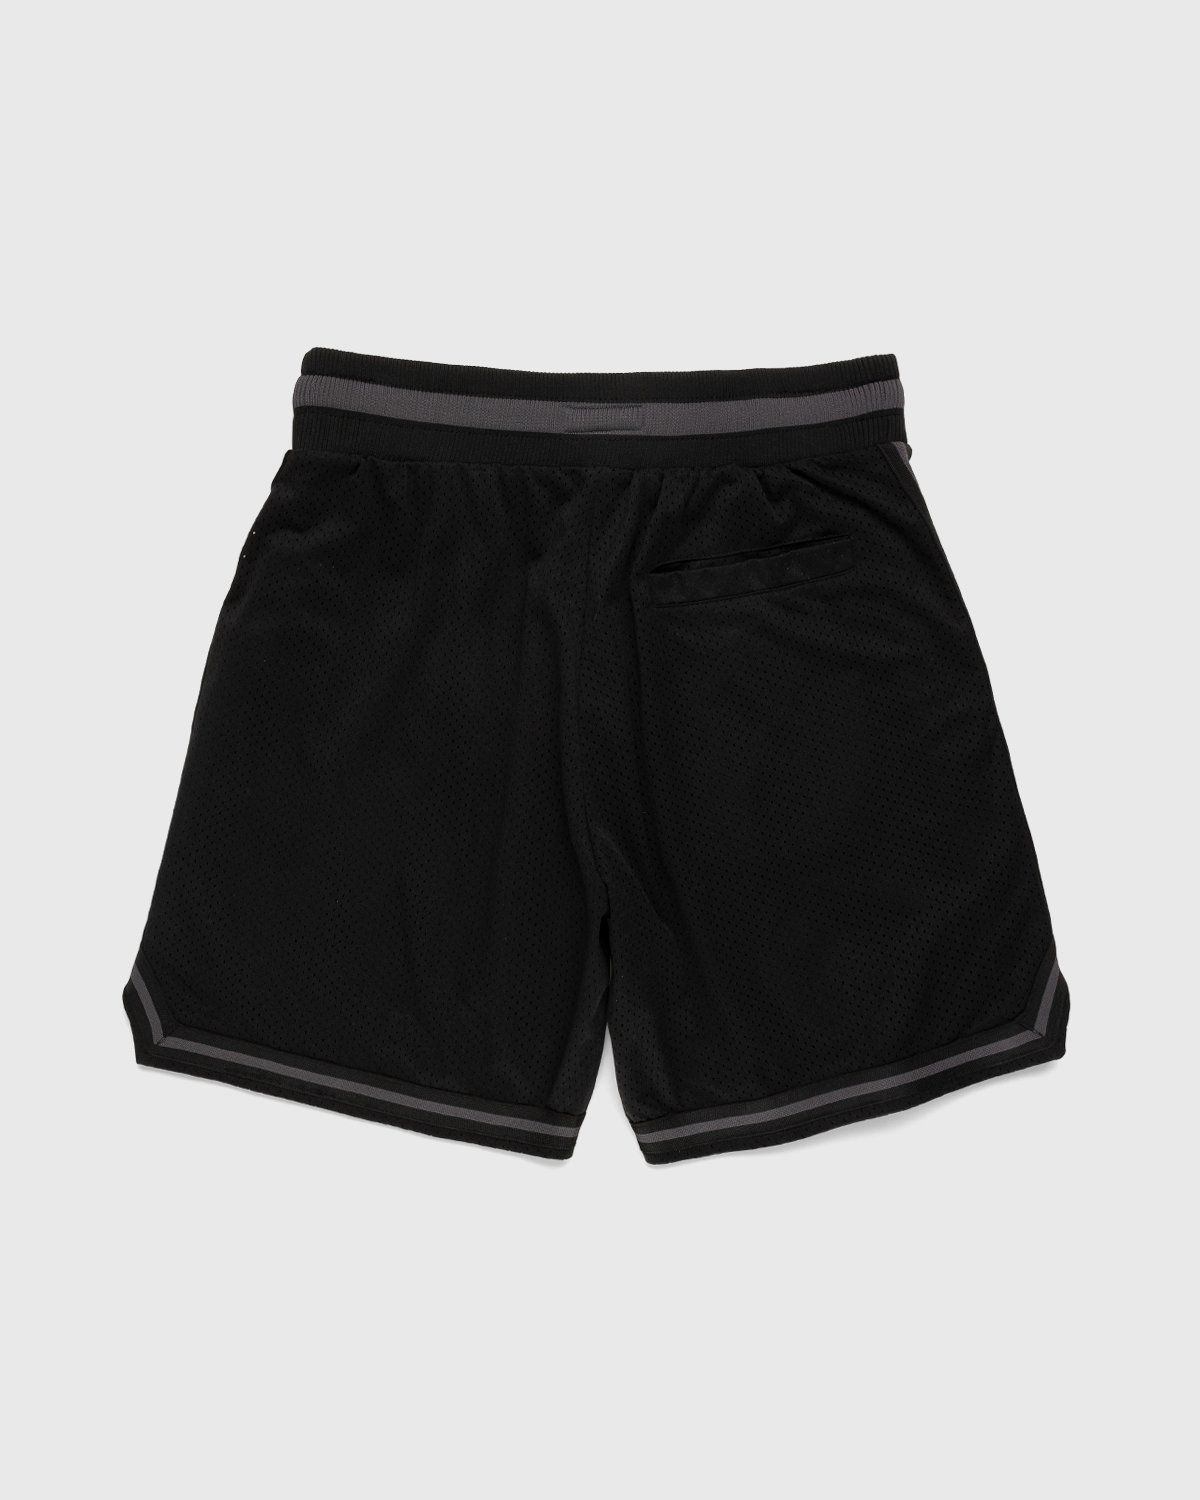 Market x UCLA x Highsnobiety – HS Sports Mesh Bruin Shorts Black - Shorts - Black - Image 2